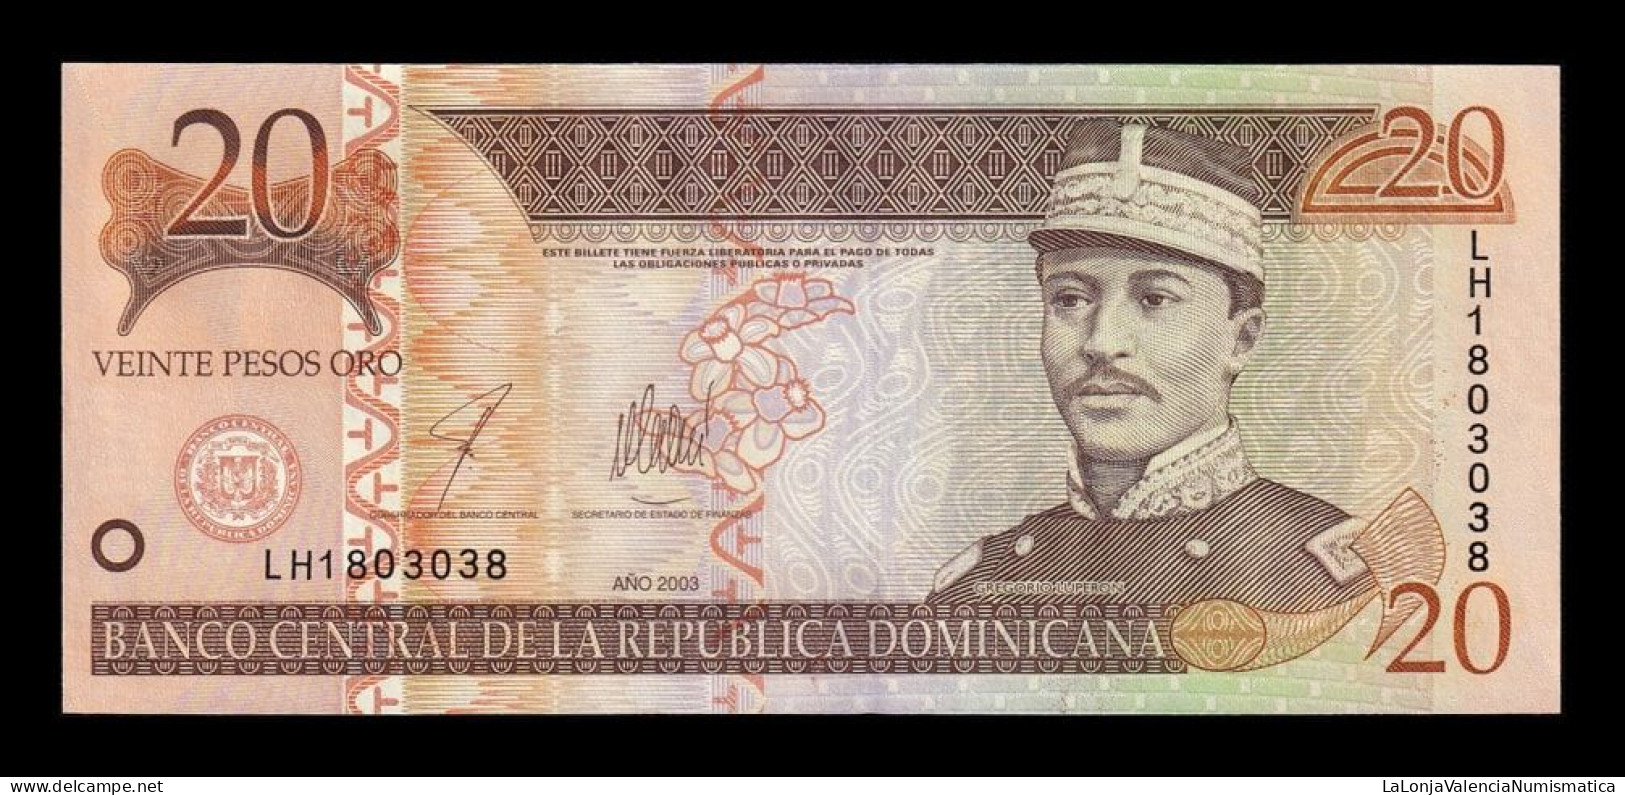 República Dominicana 20 Pesos Oro 2003 Pick 169c Sc Unc - Dominicana